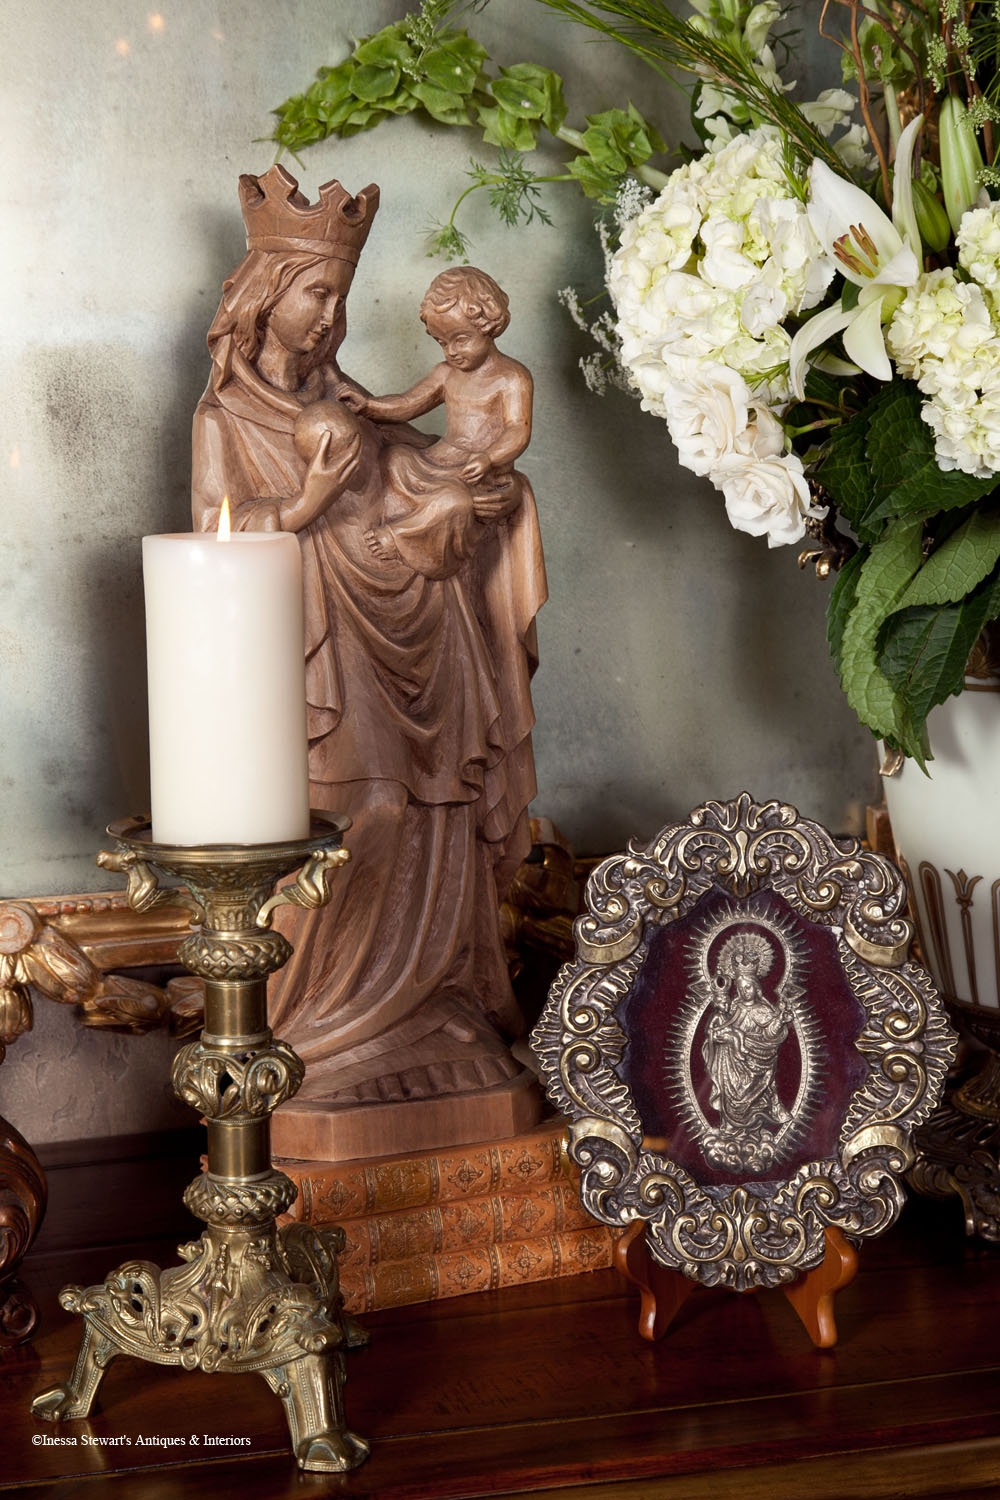 Religious Antiques, antique accessories at Inessa Stewart's Antiques